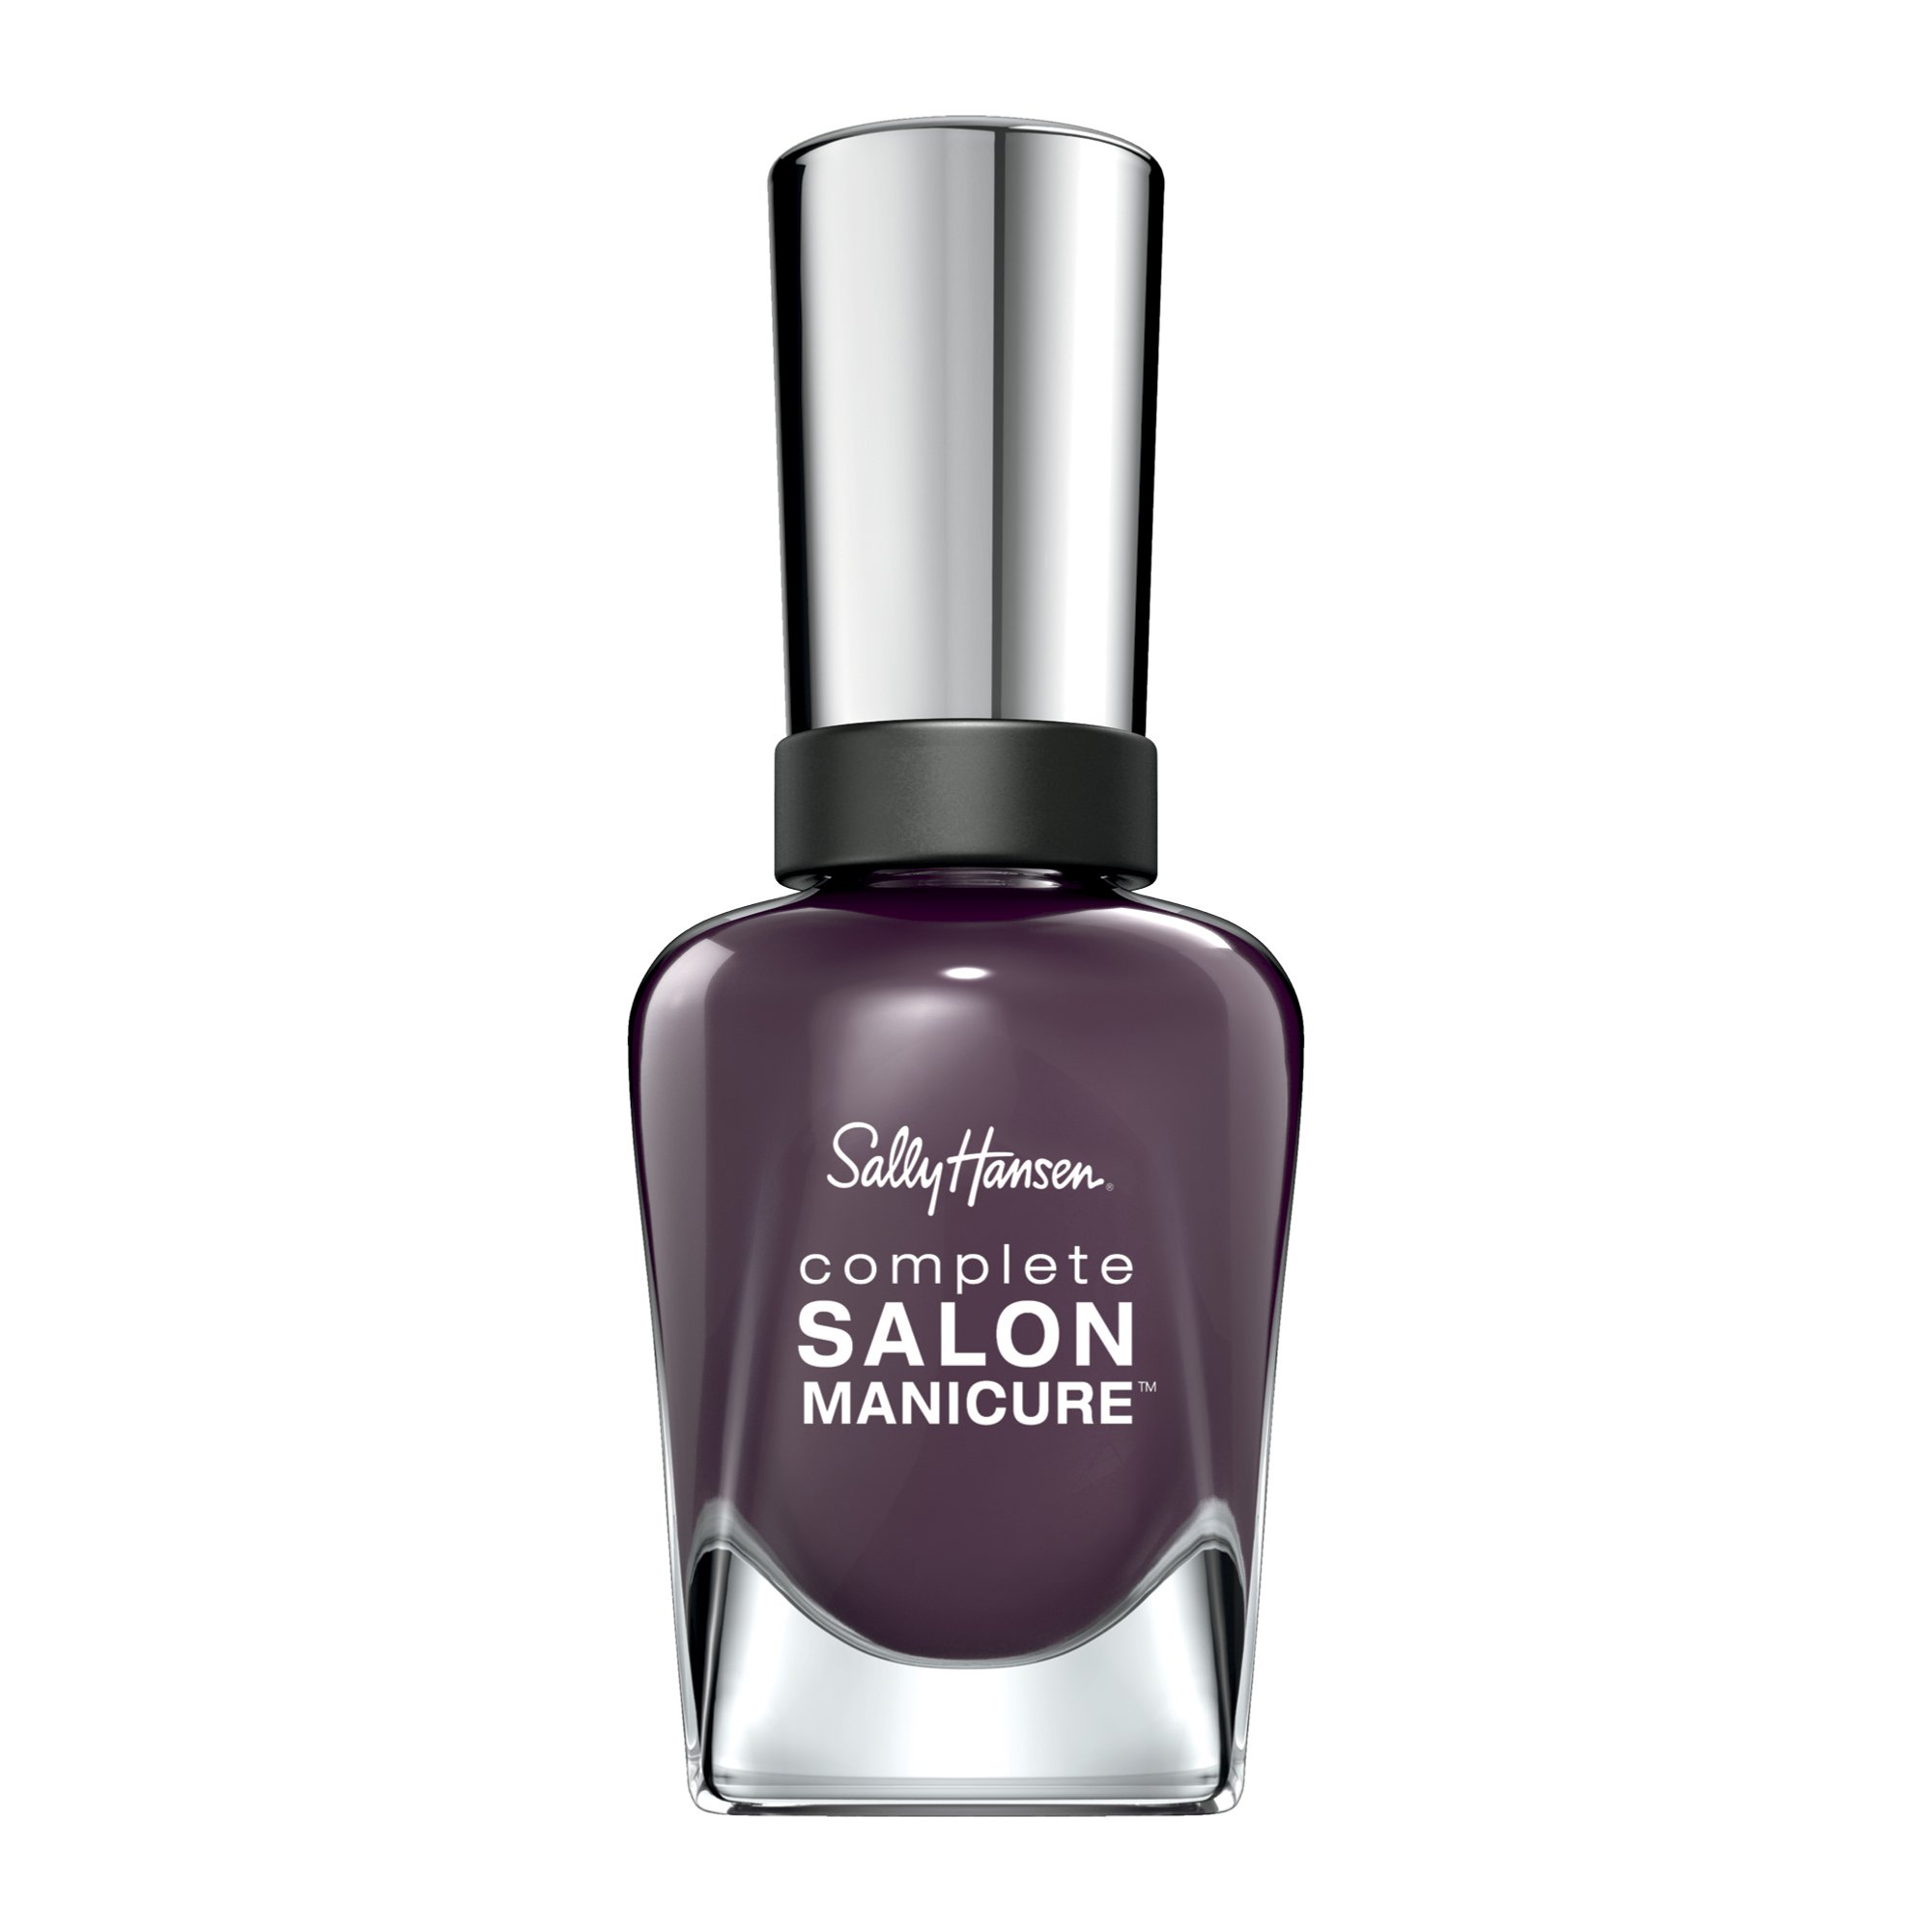 Sally Hansen Complete Salon Manicure Clean Slate 0.5 fl oz - image 3 of 5